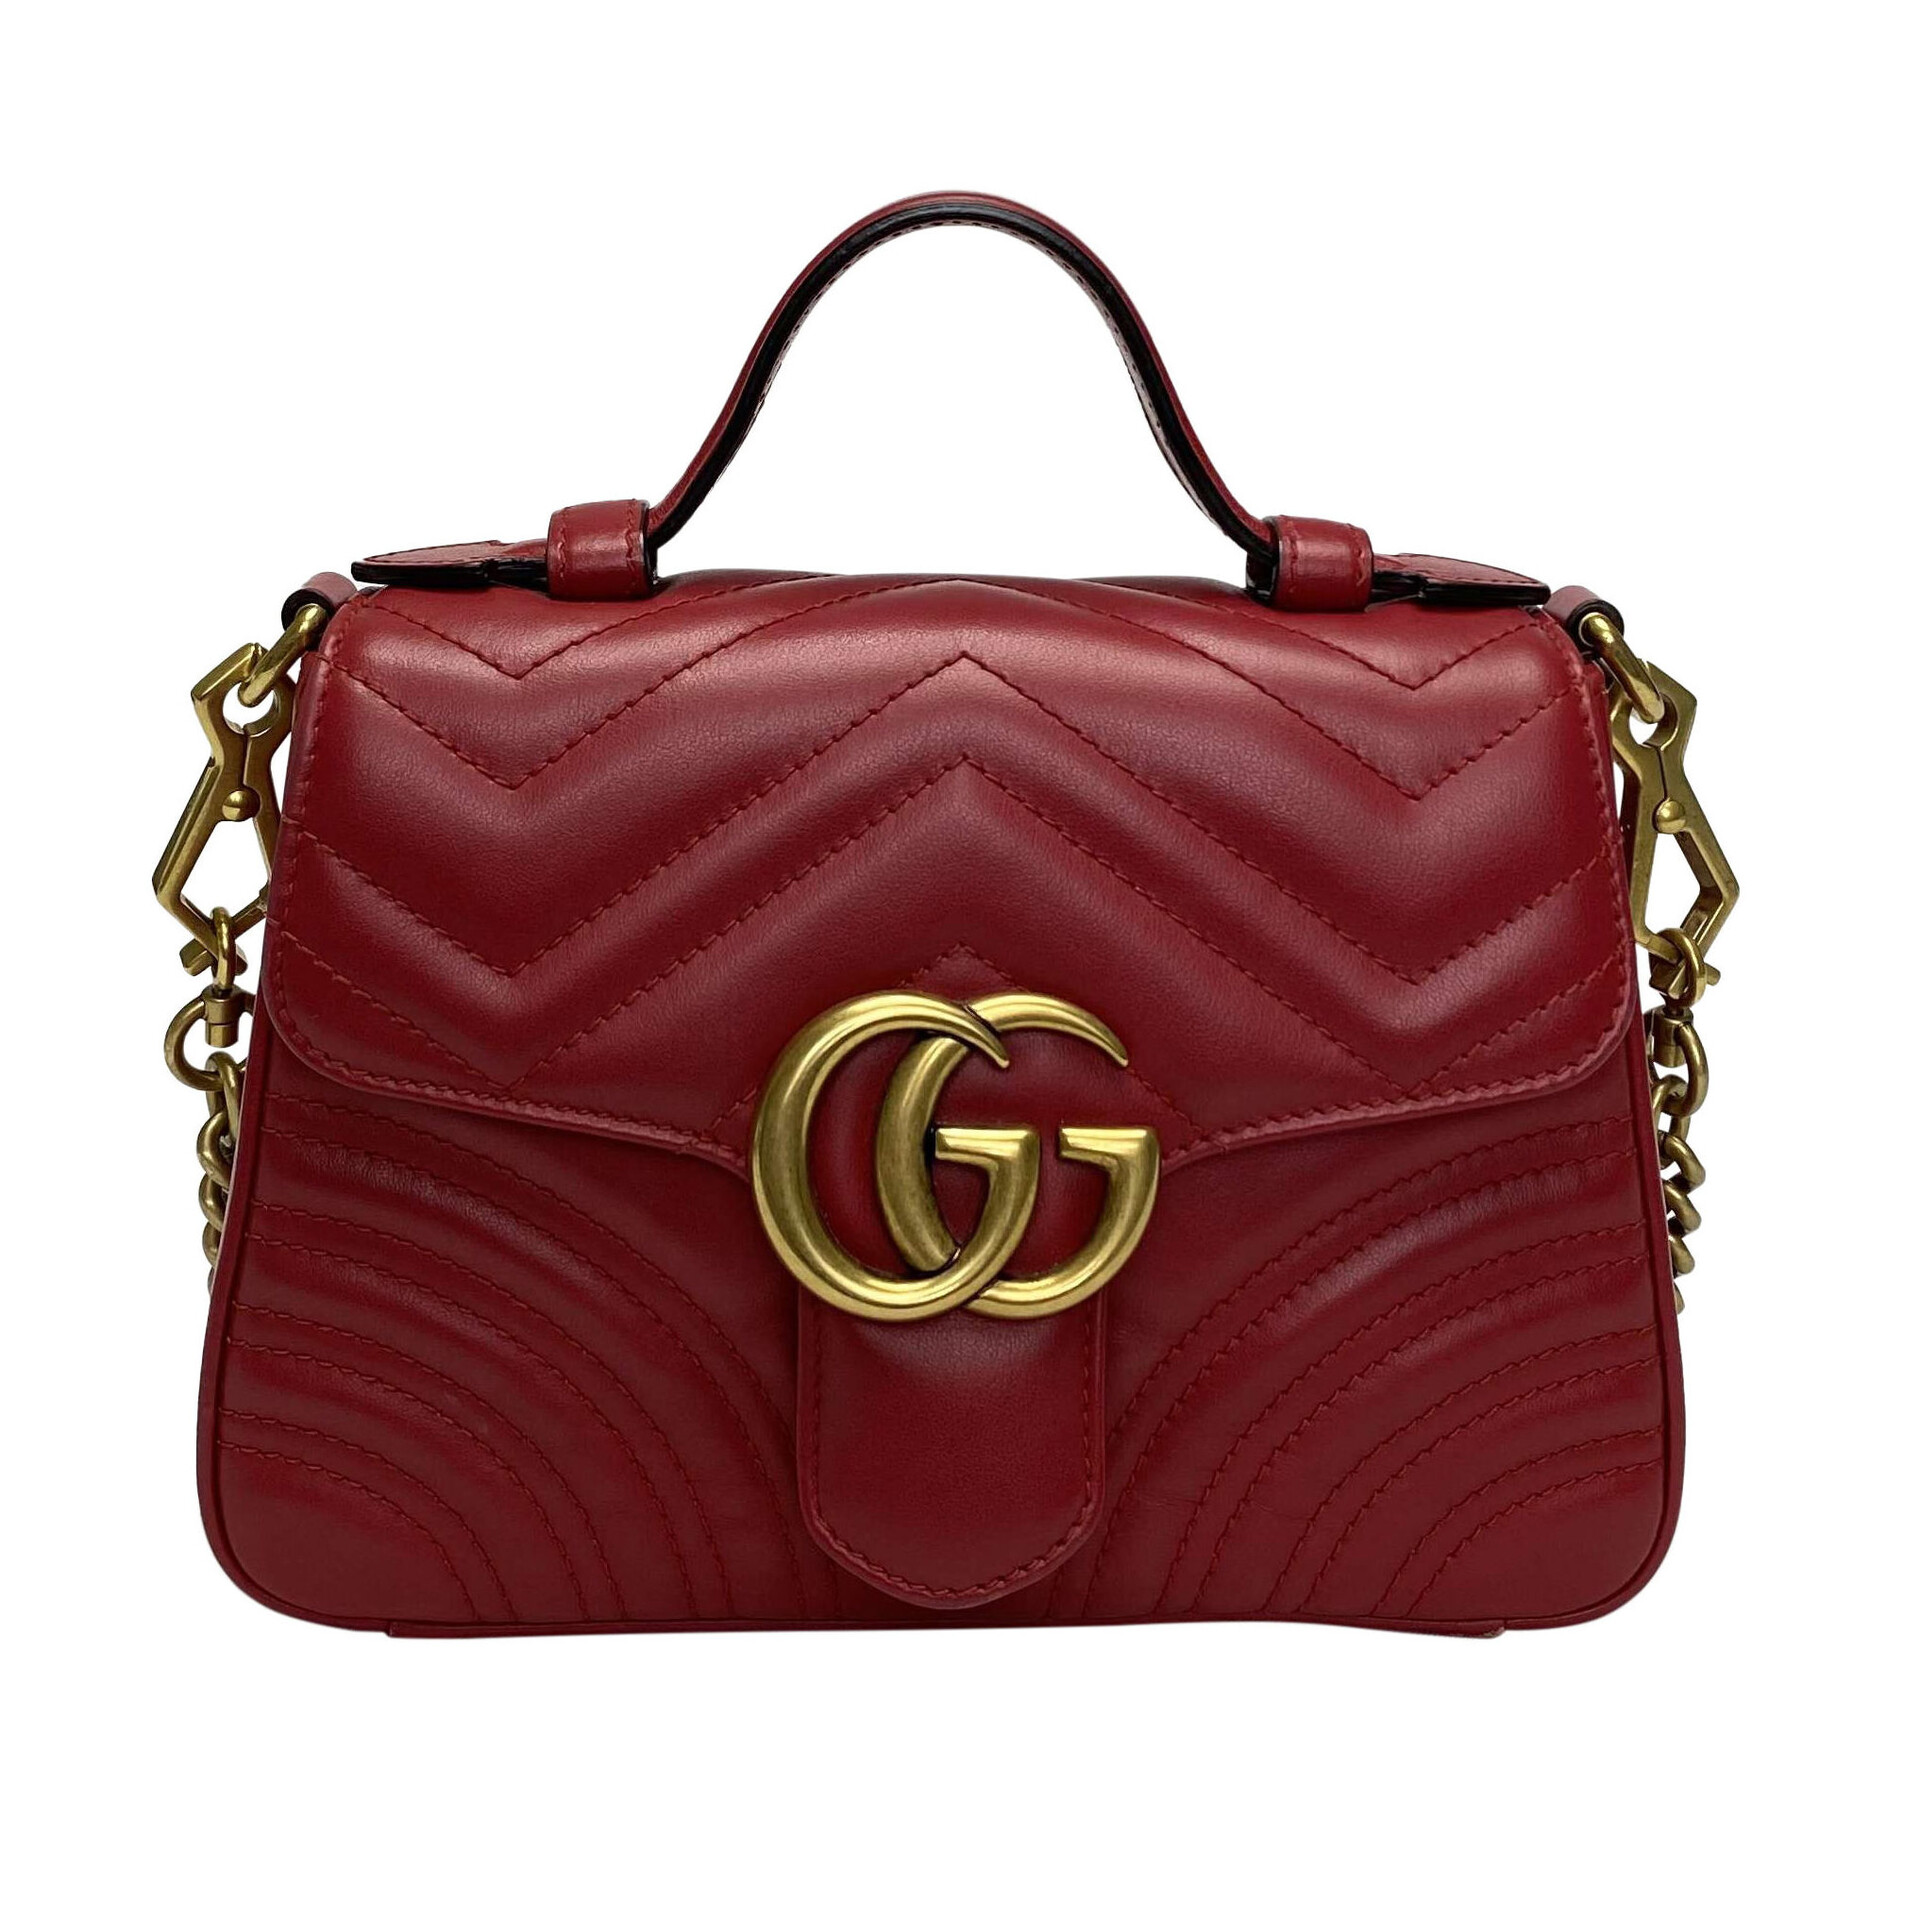 Bolsa Gucci GG Mini Marmont Vermelha